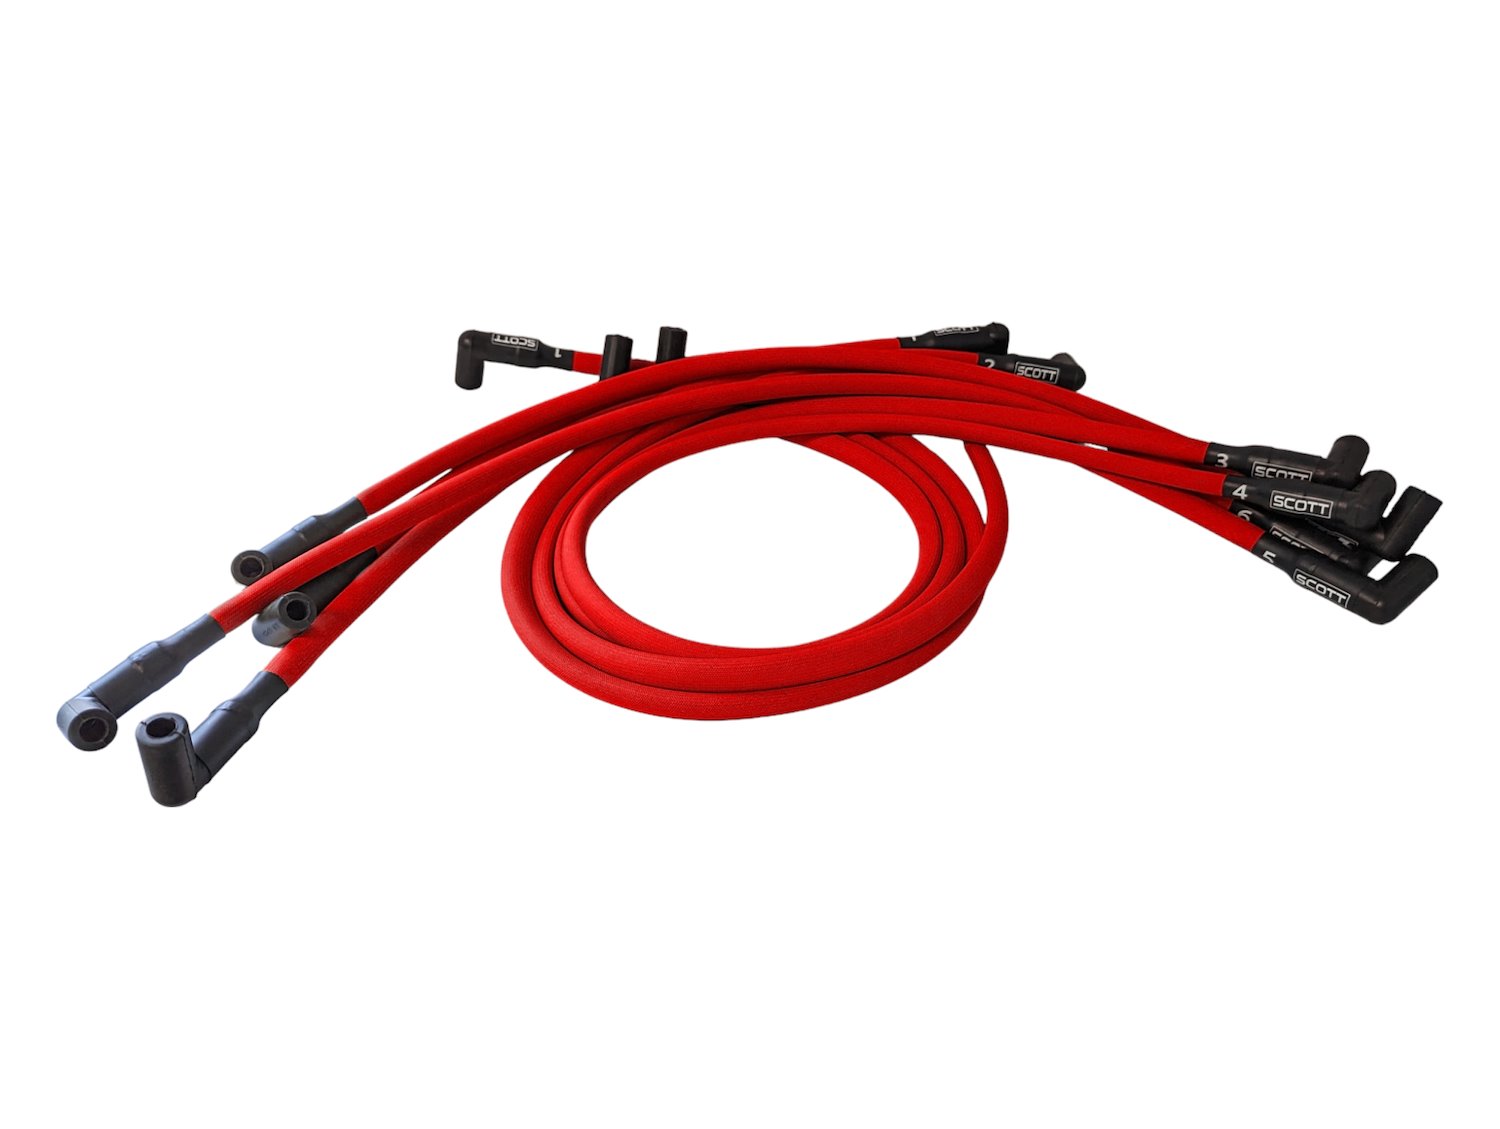 SPW300-PS-530-2 Super Mag Fiberglass-Oversleeved Spark Plug Wire Set for Big Block Ford Dragster, Under Header [Red]